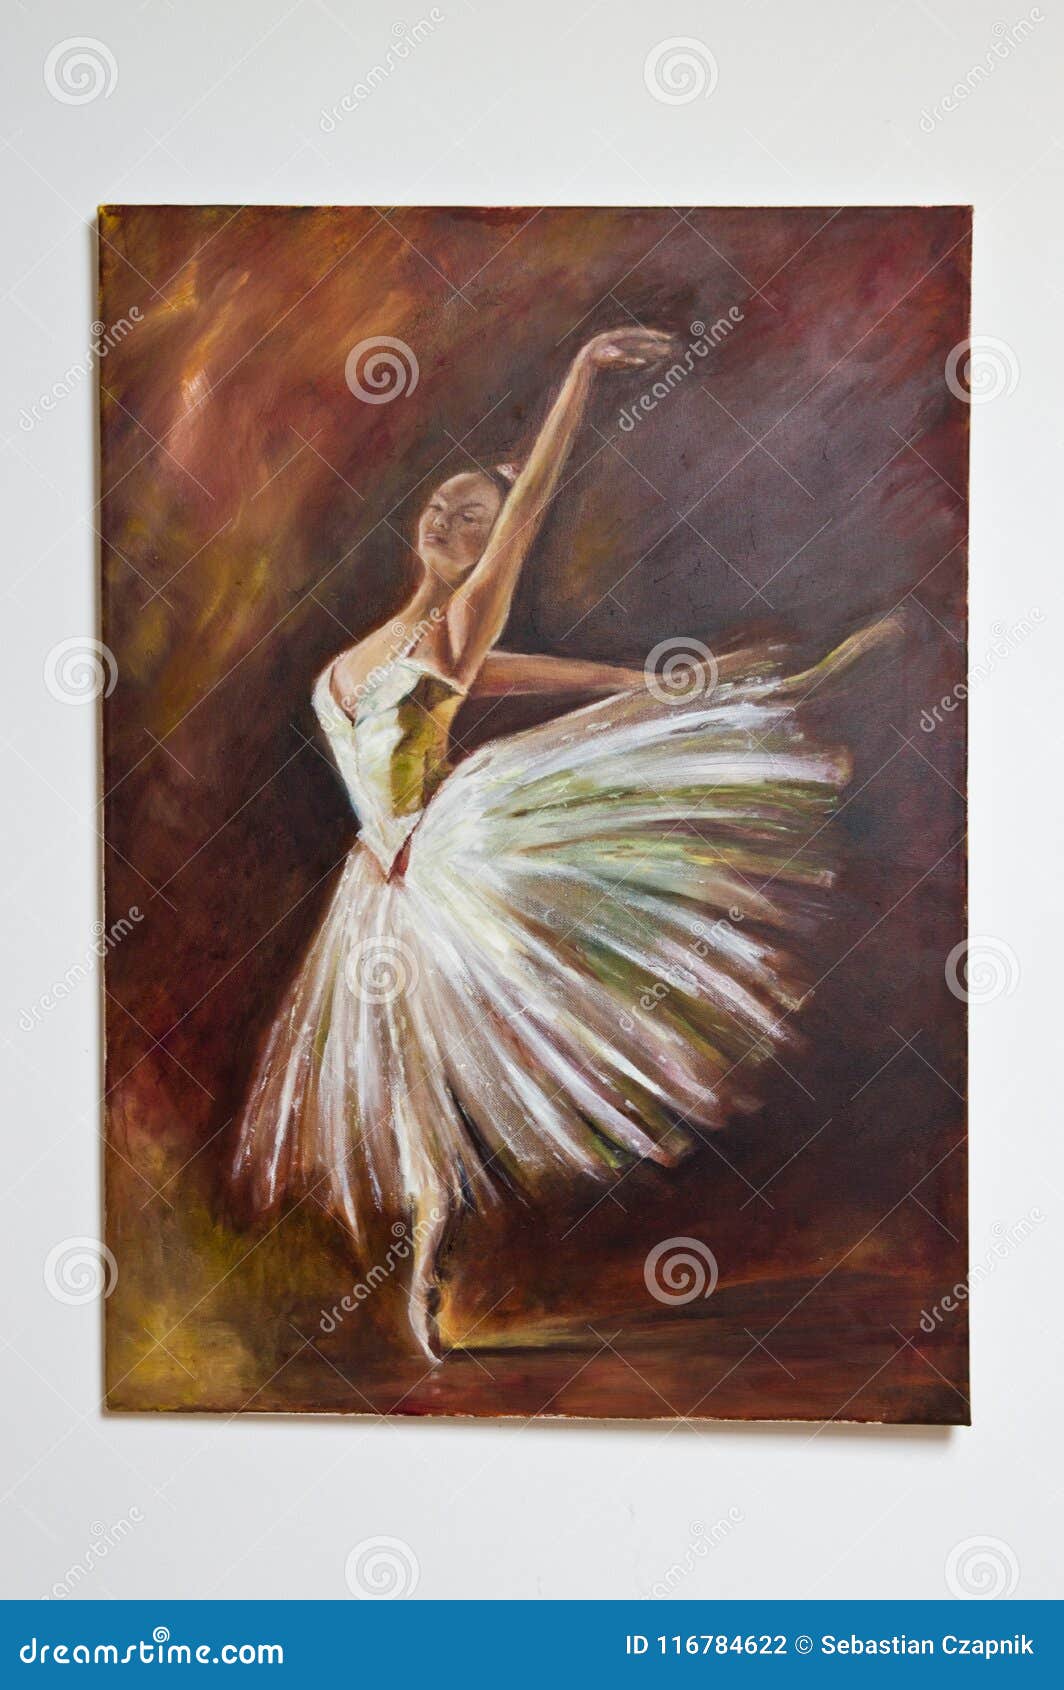 Large Wall Metal Art Print Dancing Woman Ballerina Grunge style Art Photo on Metal White Background